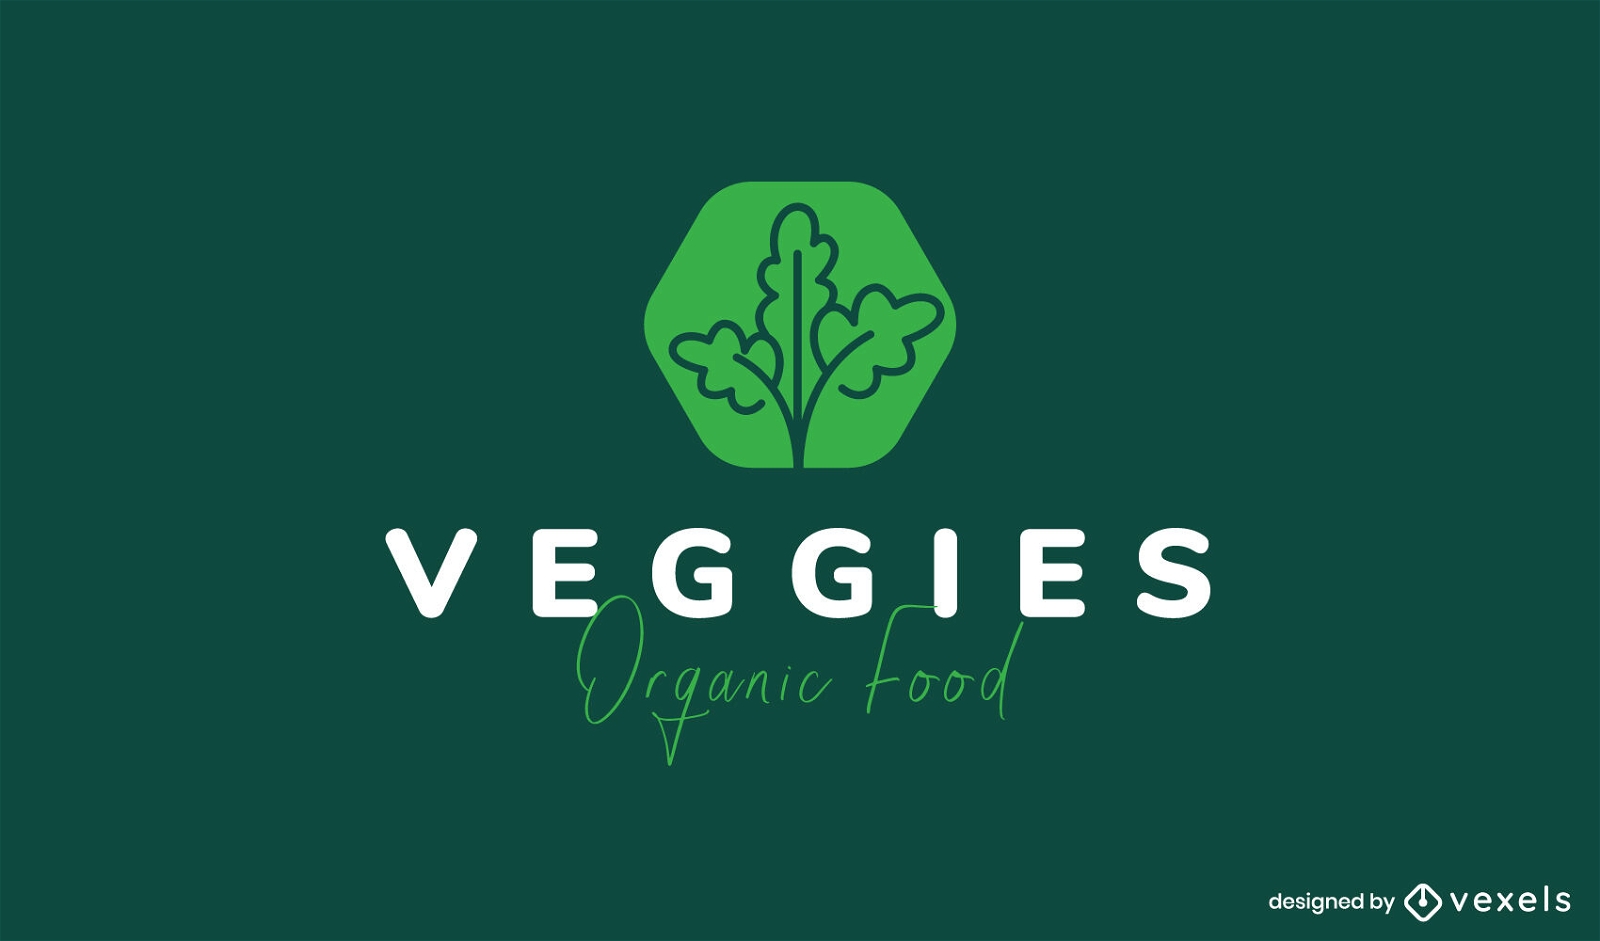 organic produce logo